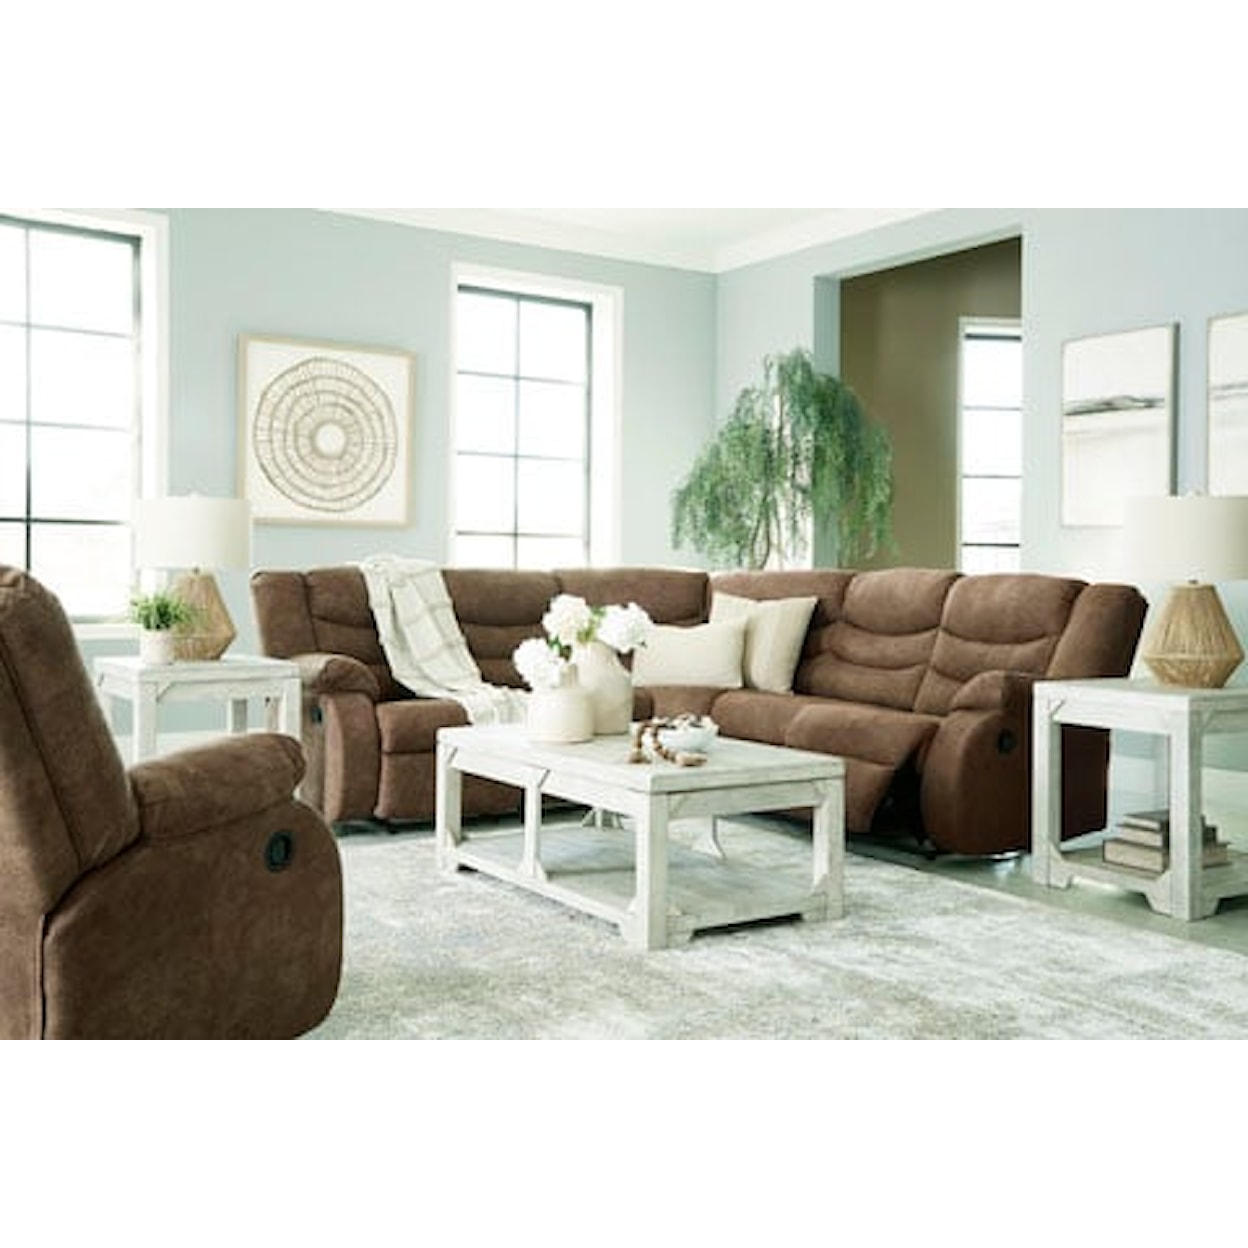 StyleLine Partymate Living Room Set